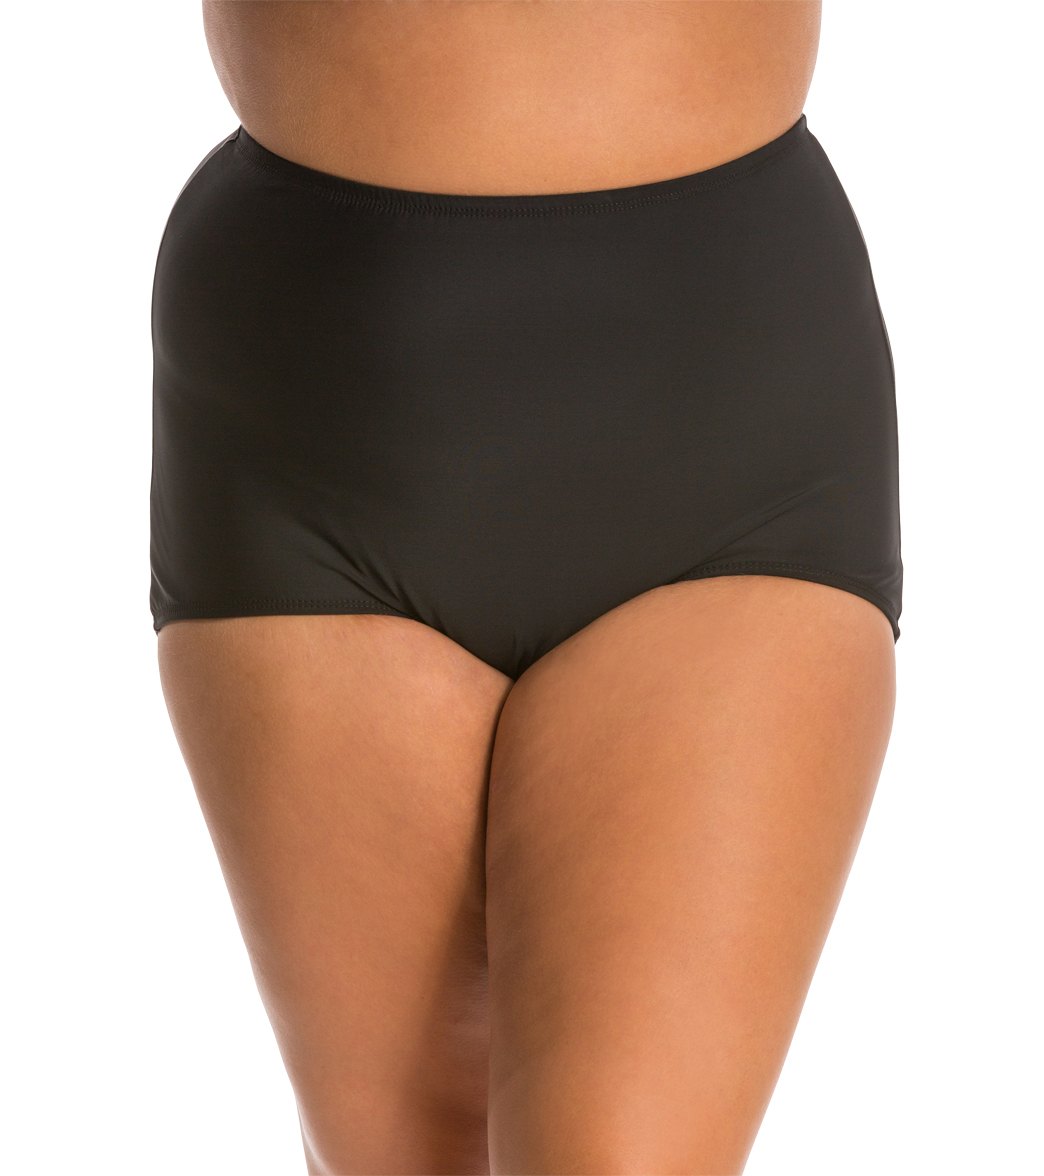 Topanga Plus Size Solid Conservative Brief Bikini Bottom